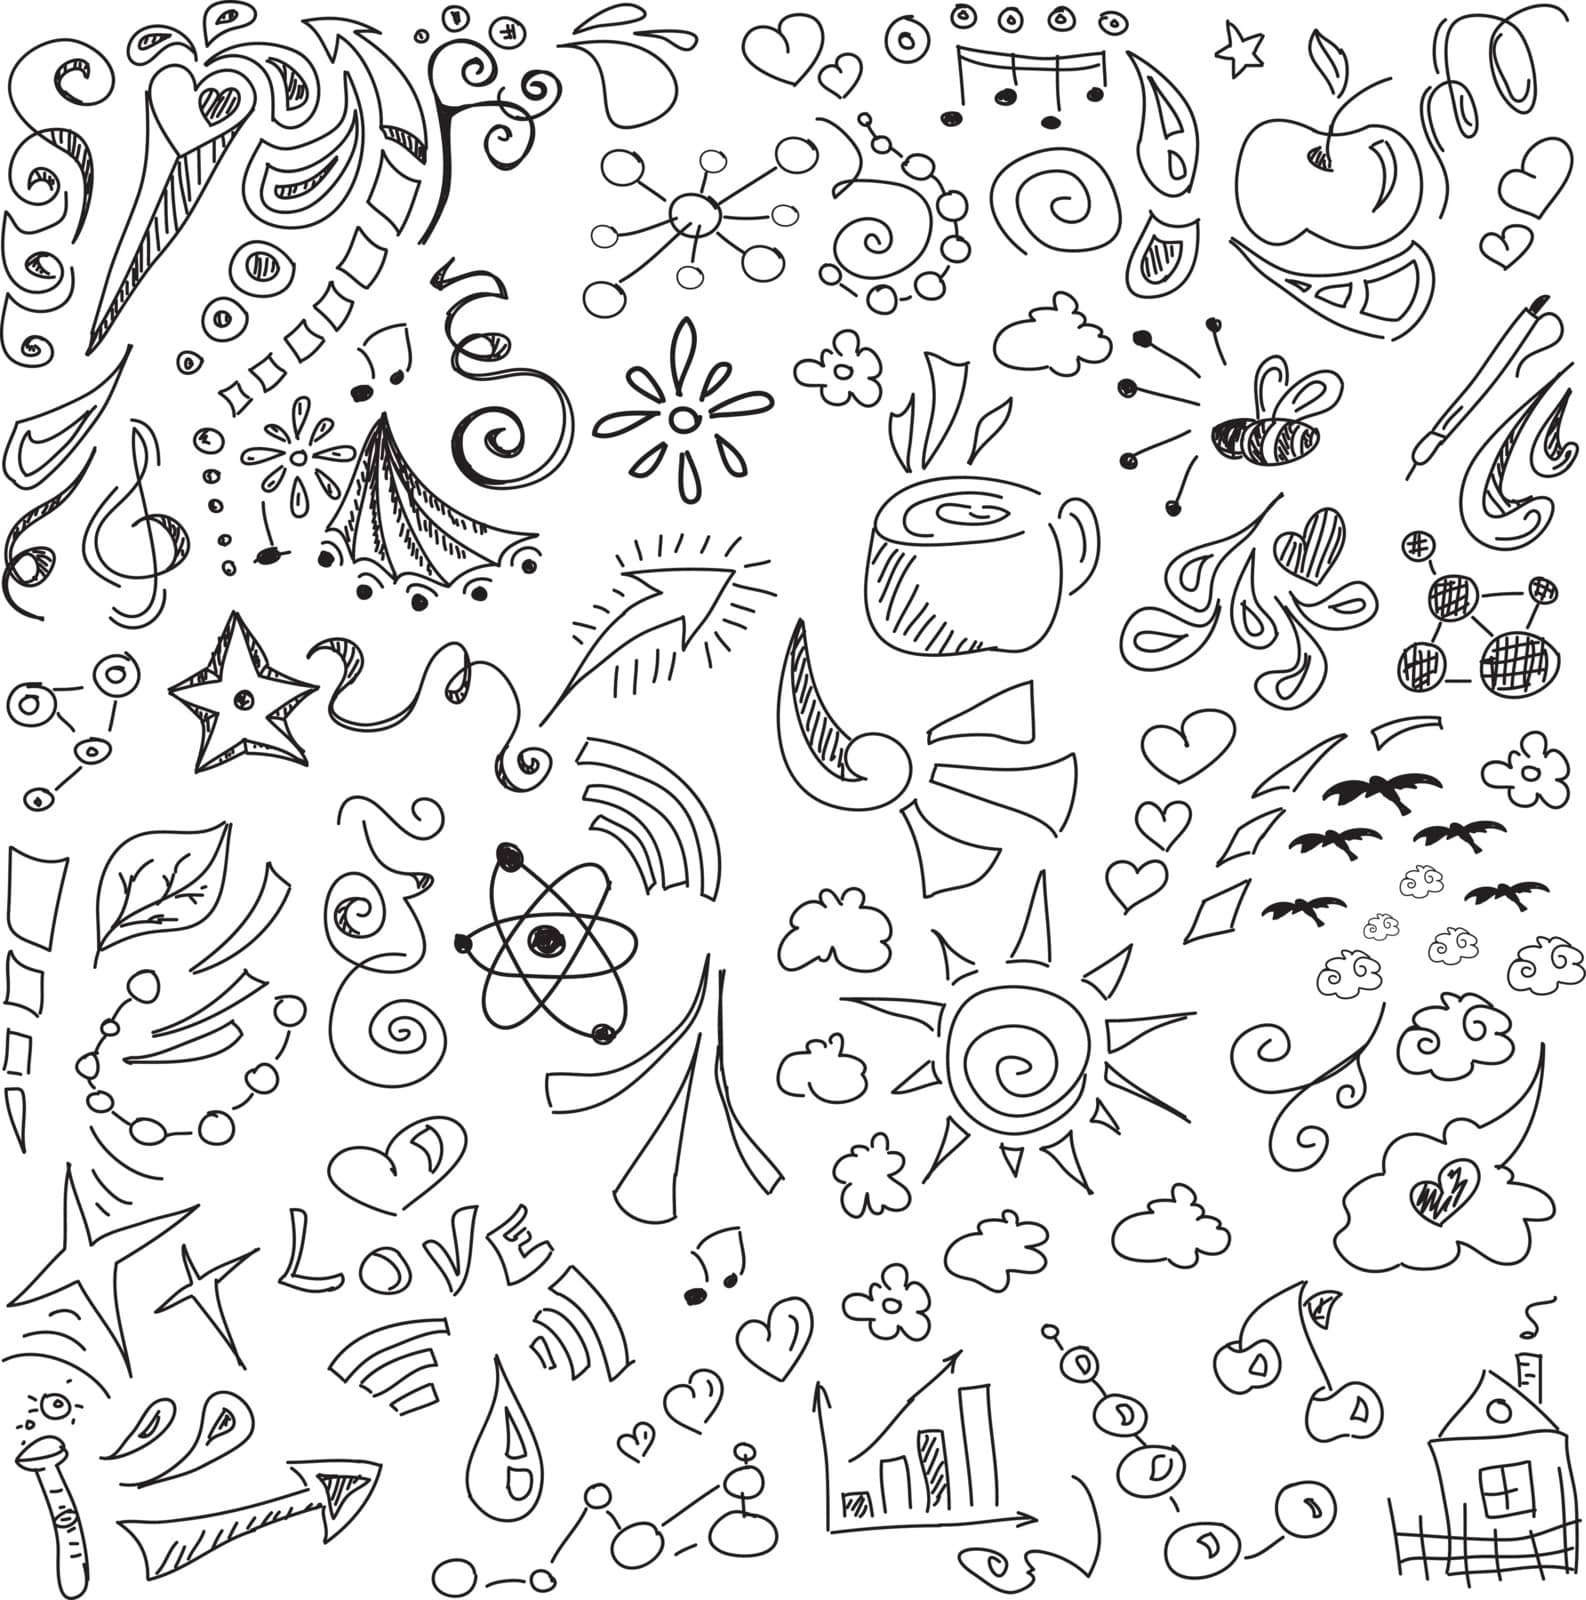 Drawn image with symbols on white background